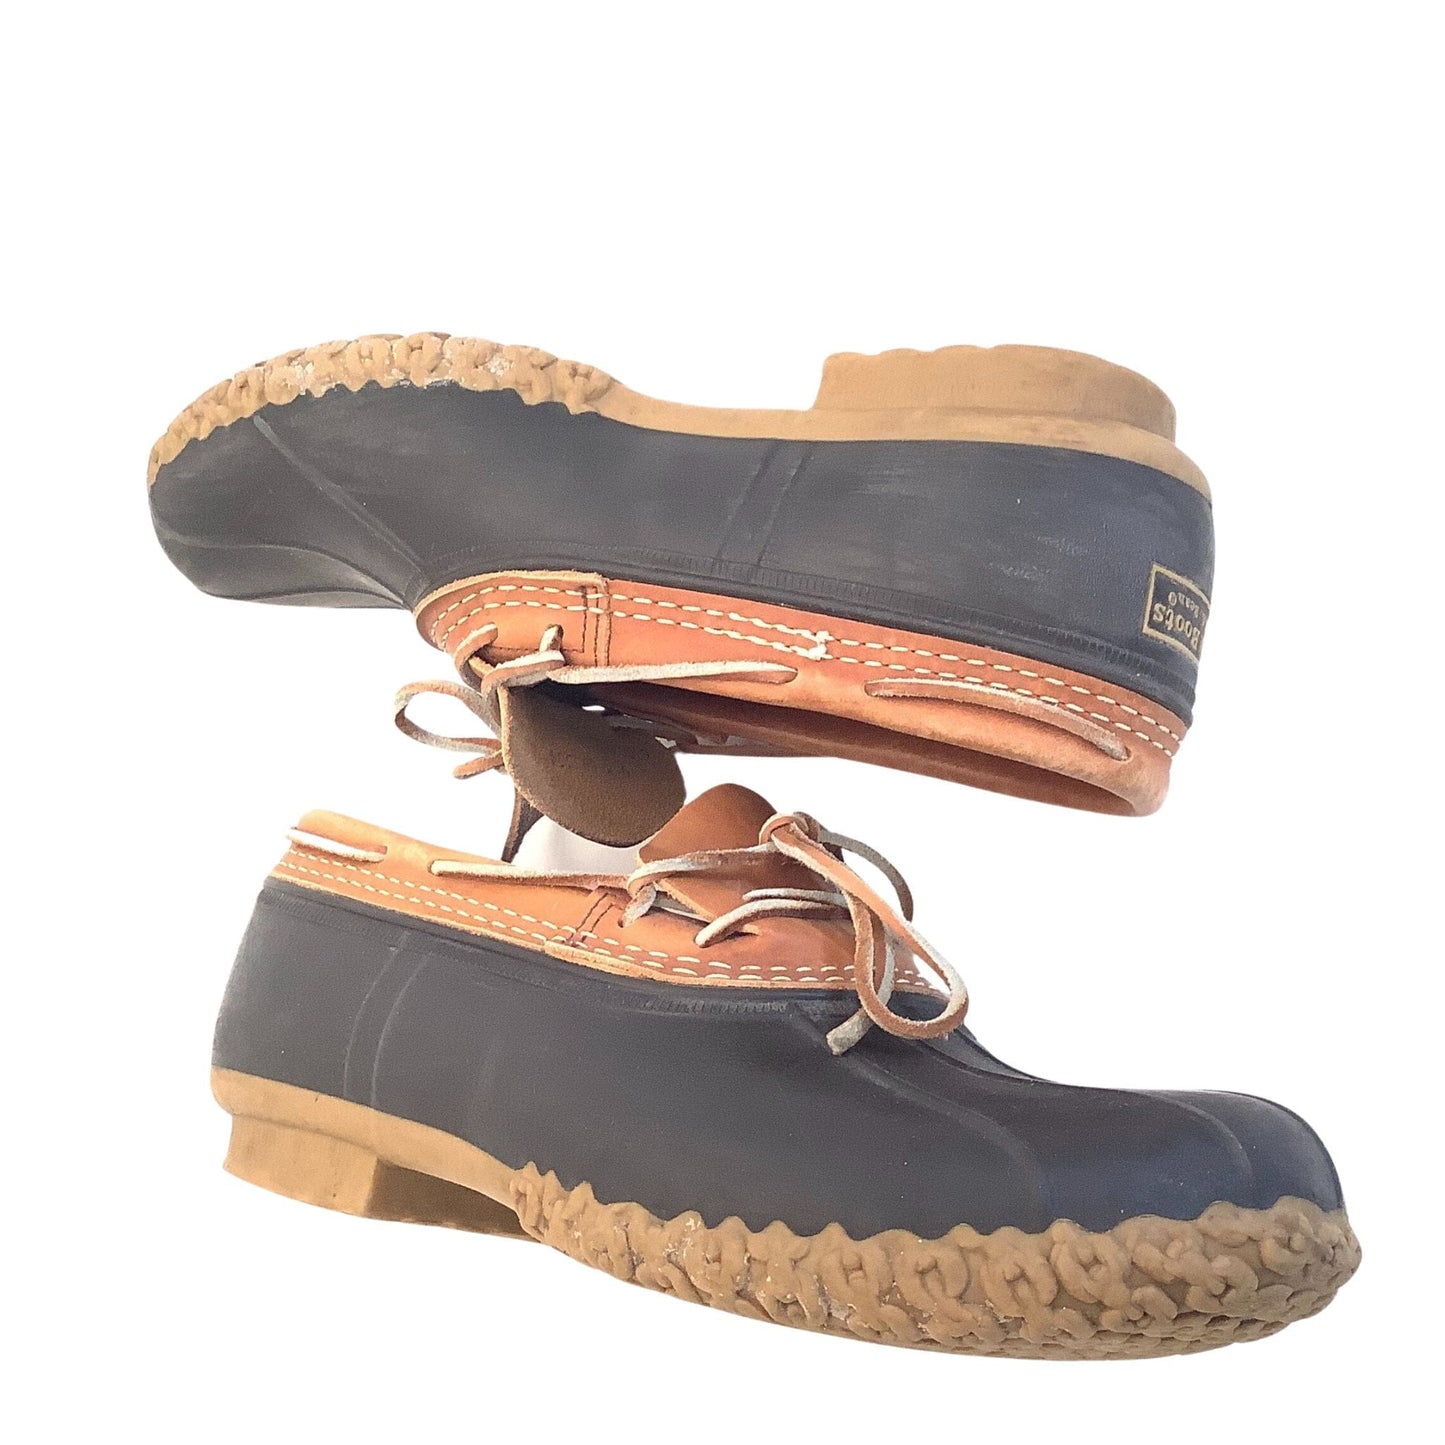 Portland USA Rubber Shoes 9 / Brown / Vintage 1990s